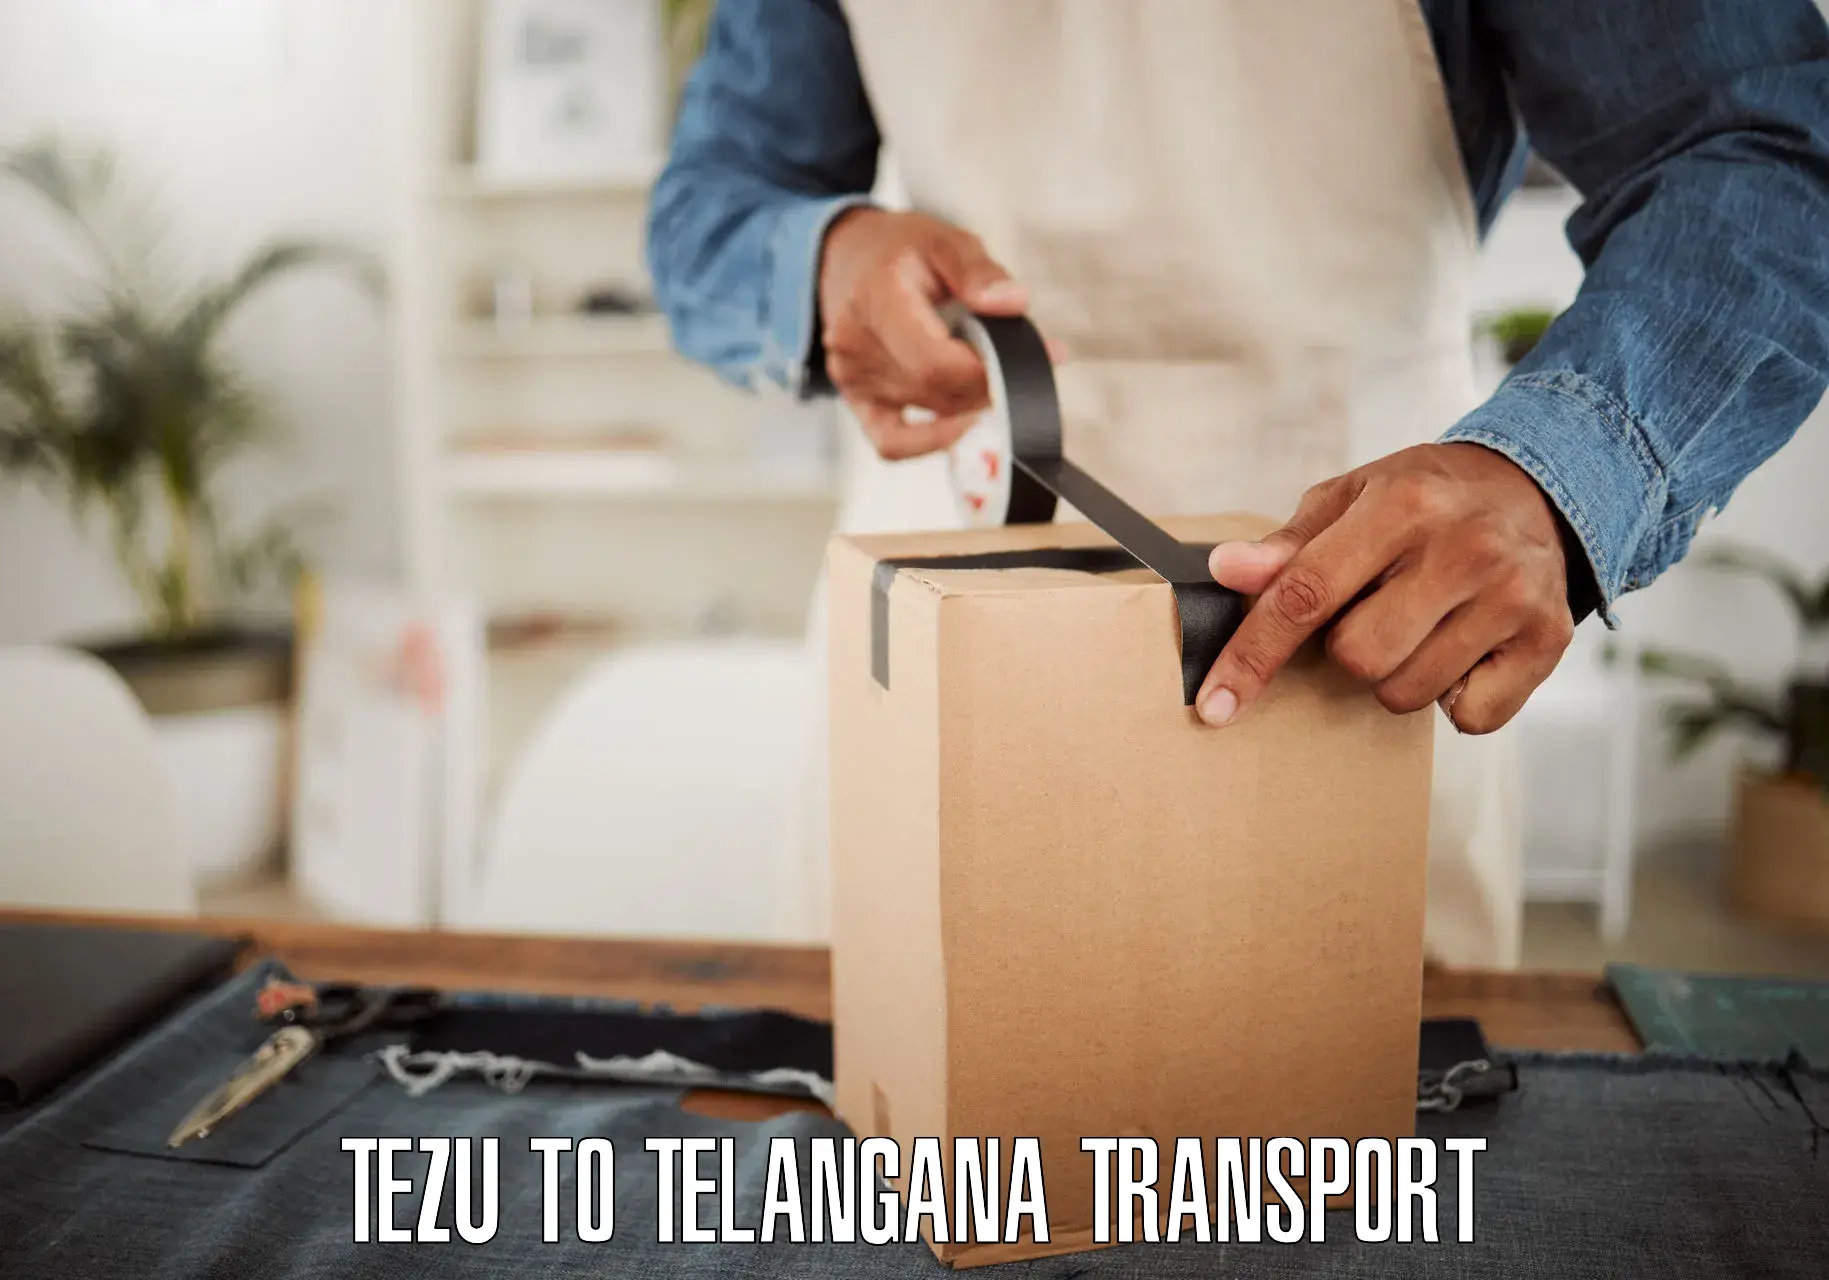 Transport in sharing Tezu to Jannaram